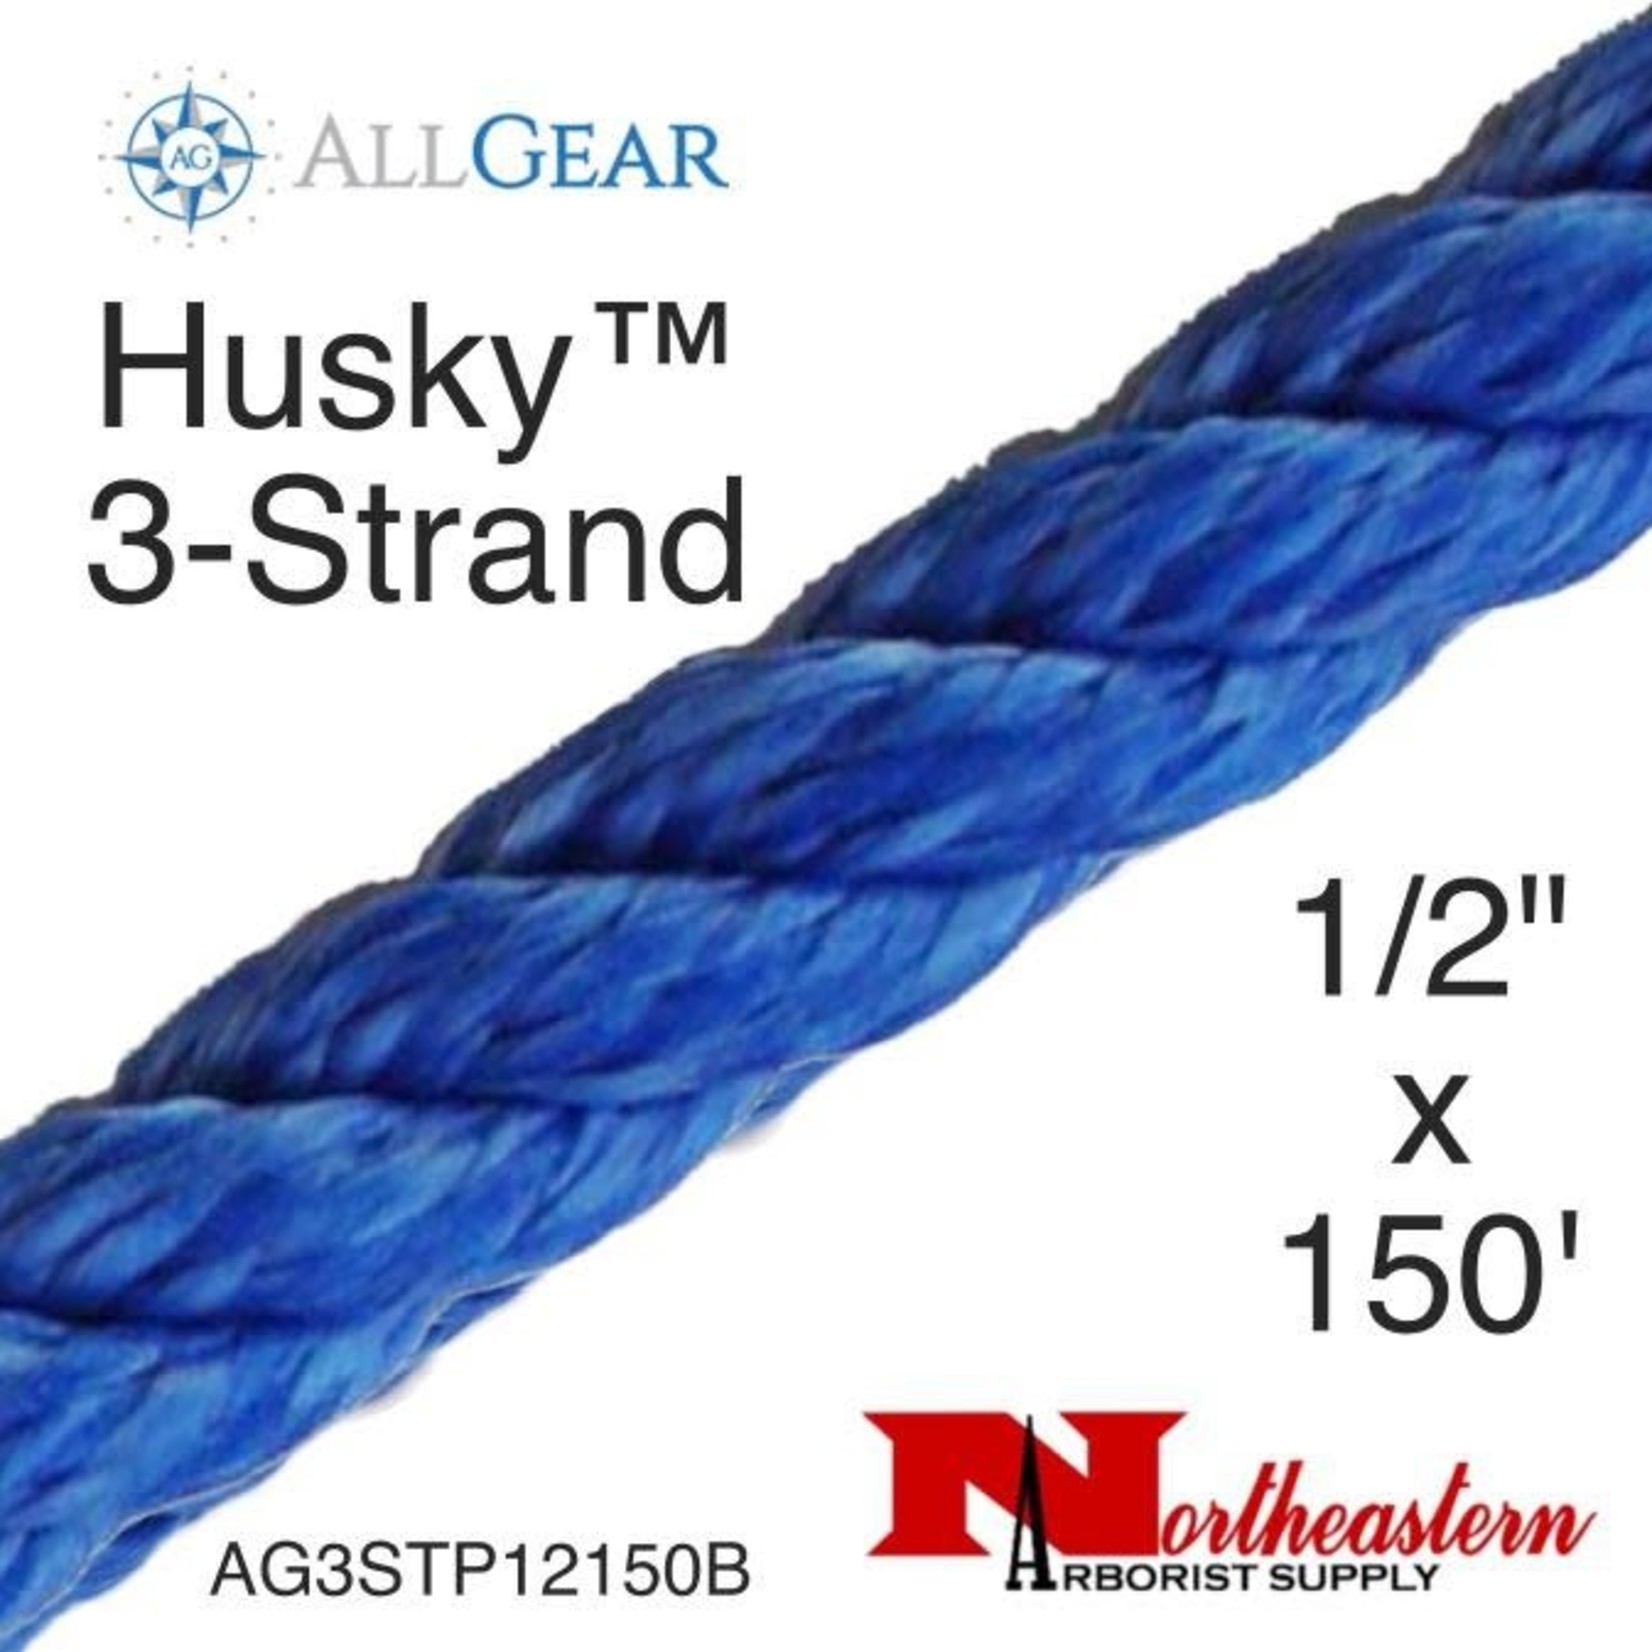 All Gear Inc. Husky 3-Strand 1/2" x 150' 3-Strand Polyester 6400Lbs ABS